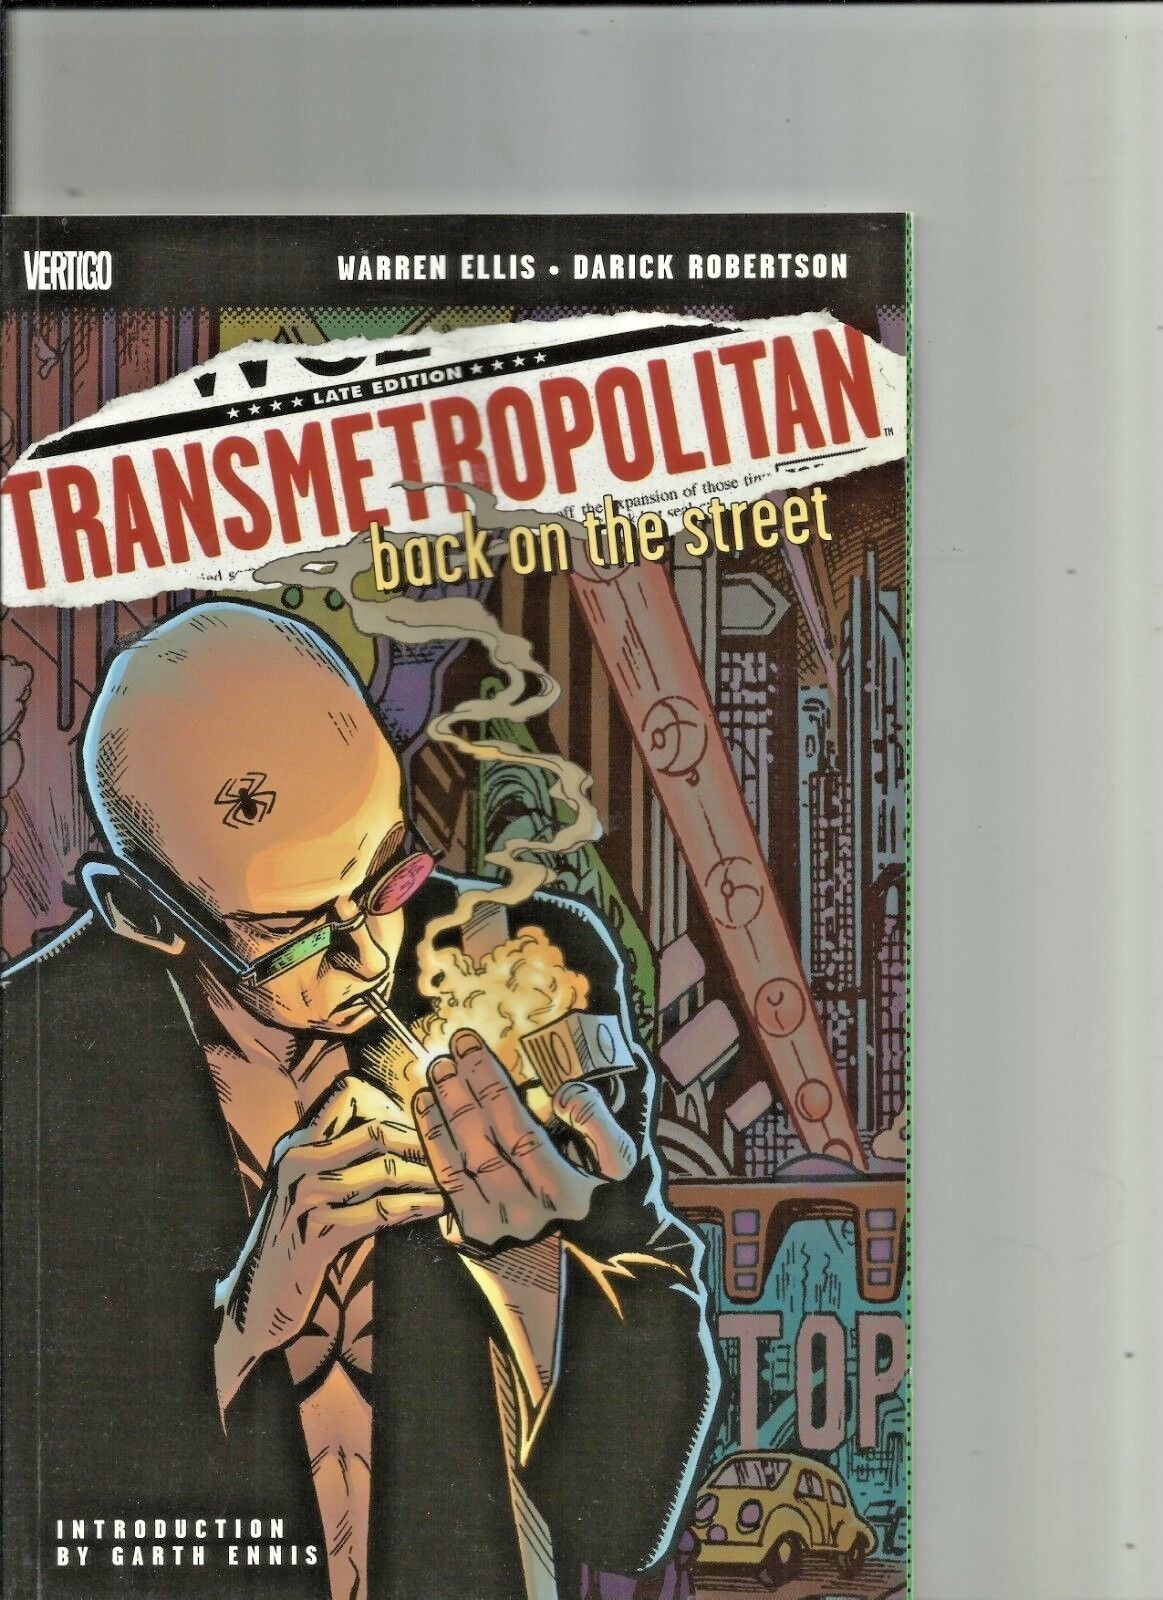 Transmetropolitan Vol 1 Back on the Street Trade Paperback Graphic Novel